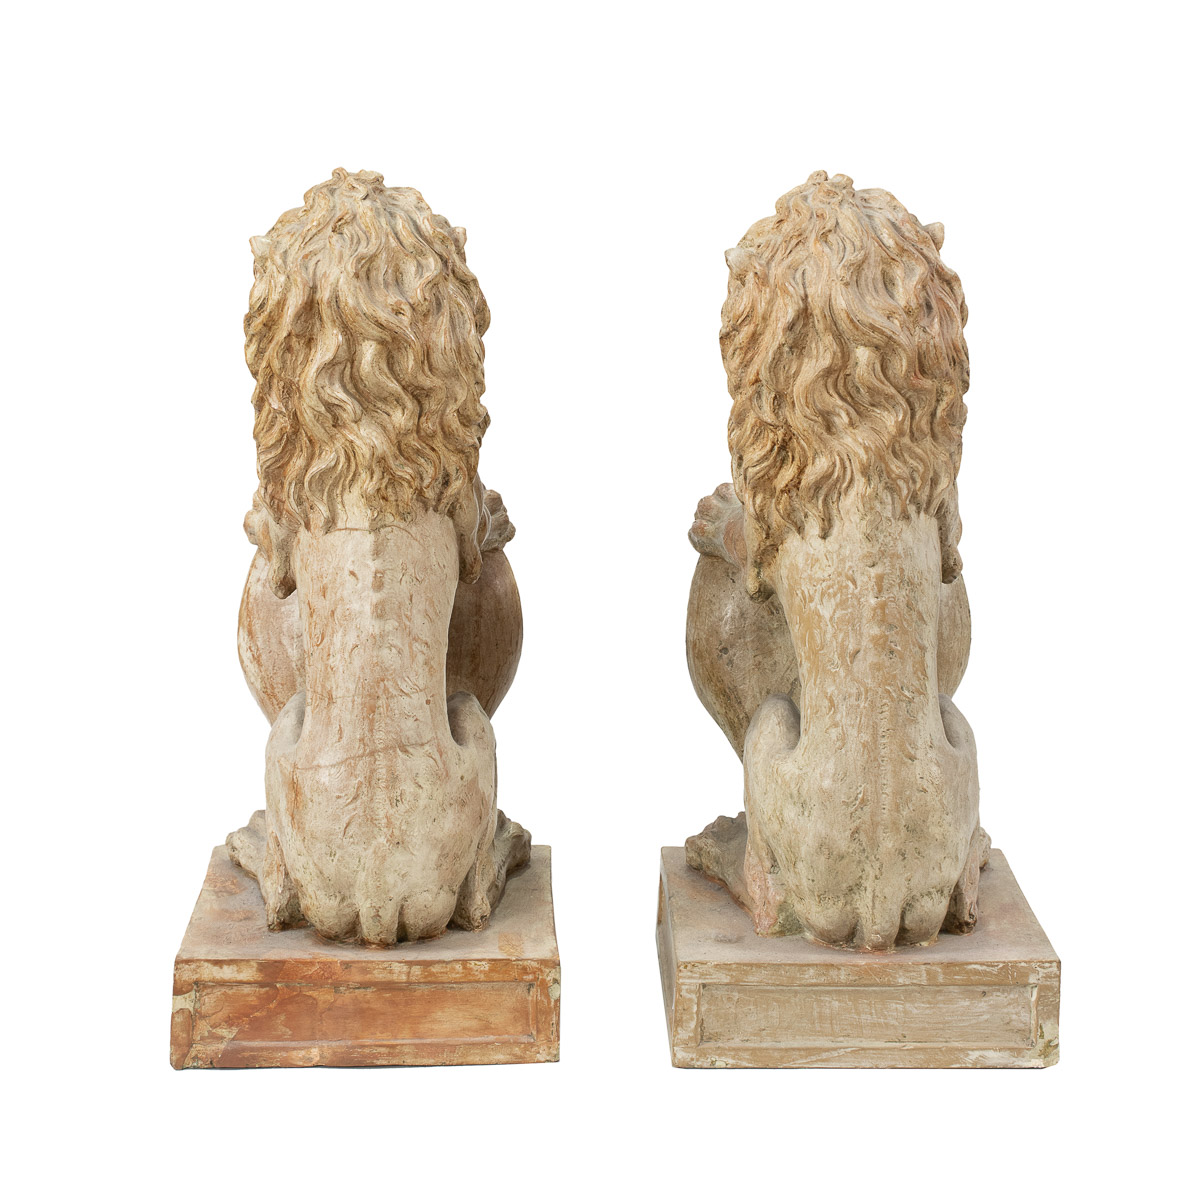 Pair of terracotta sculptures - Image 2 of 2